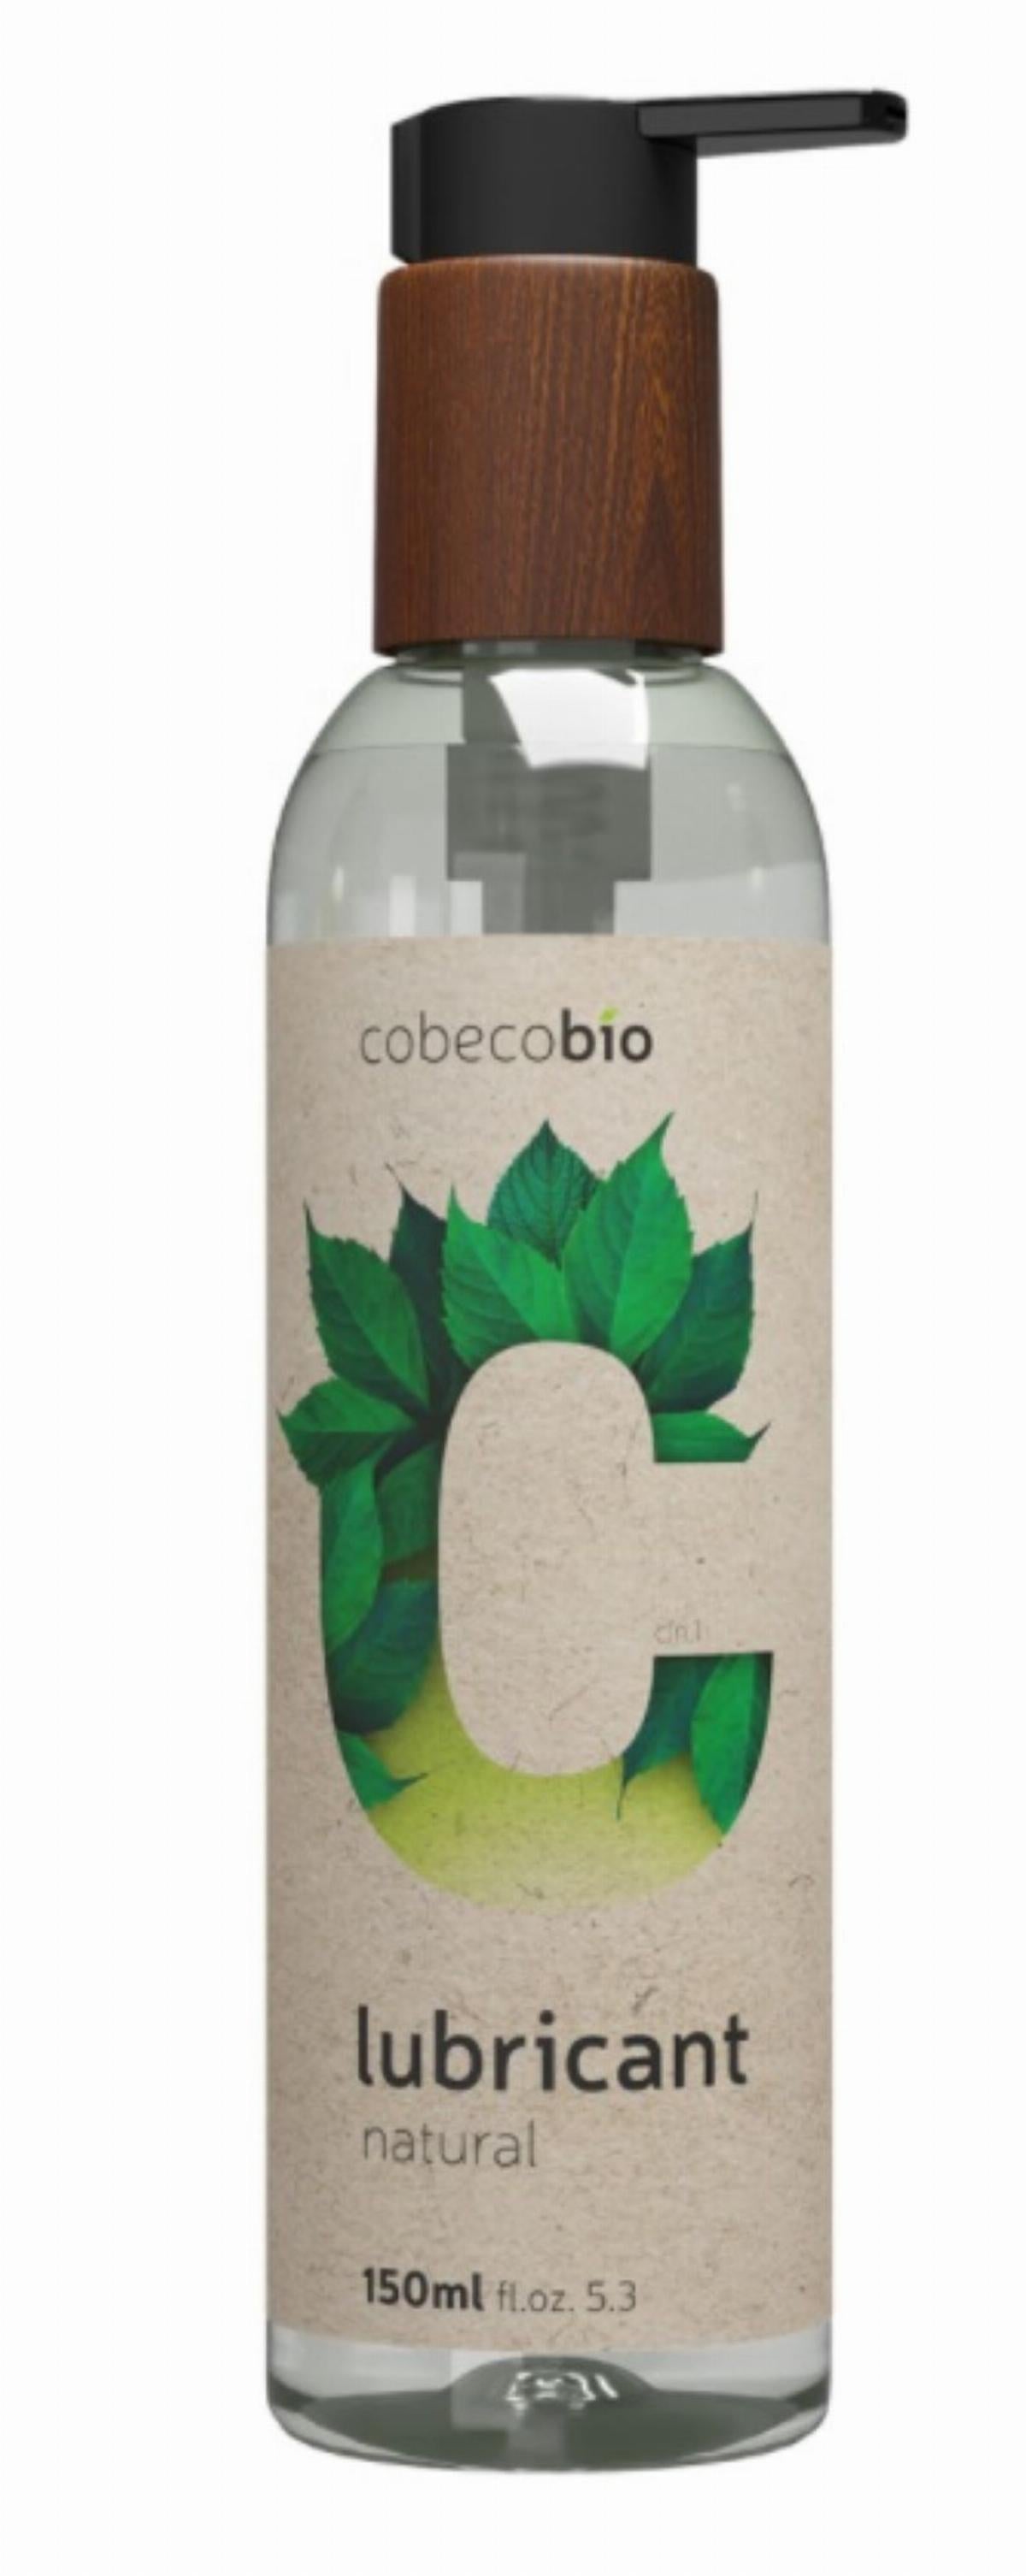 Cobeco Bio - Bio Glijmiddel - 150ml